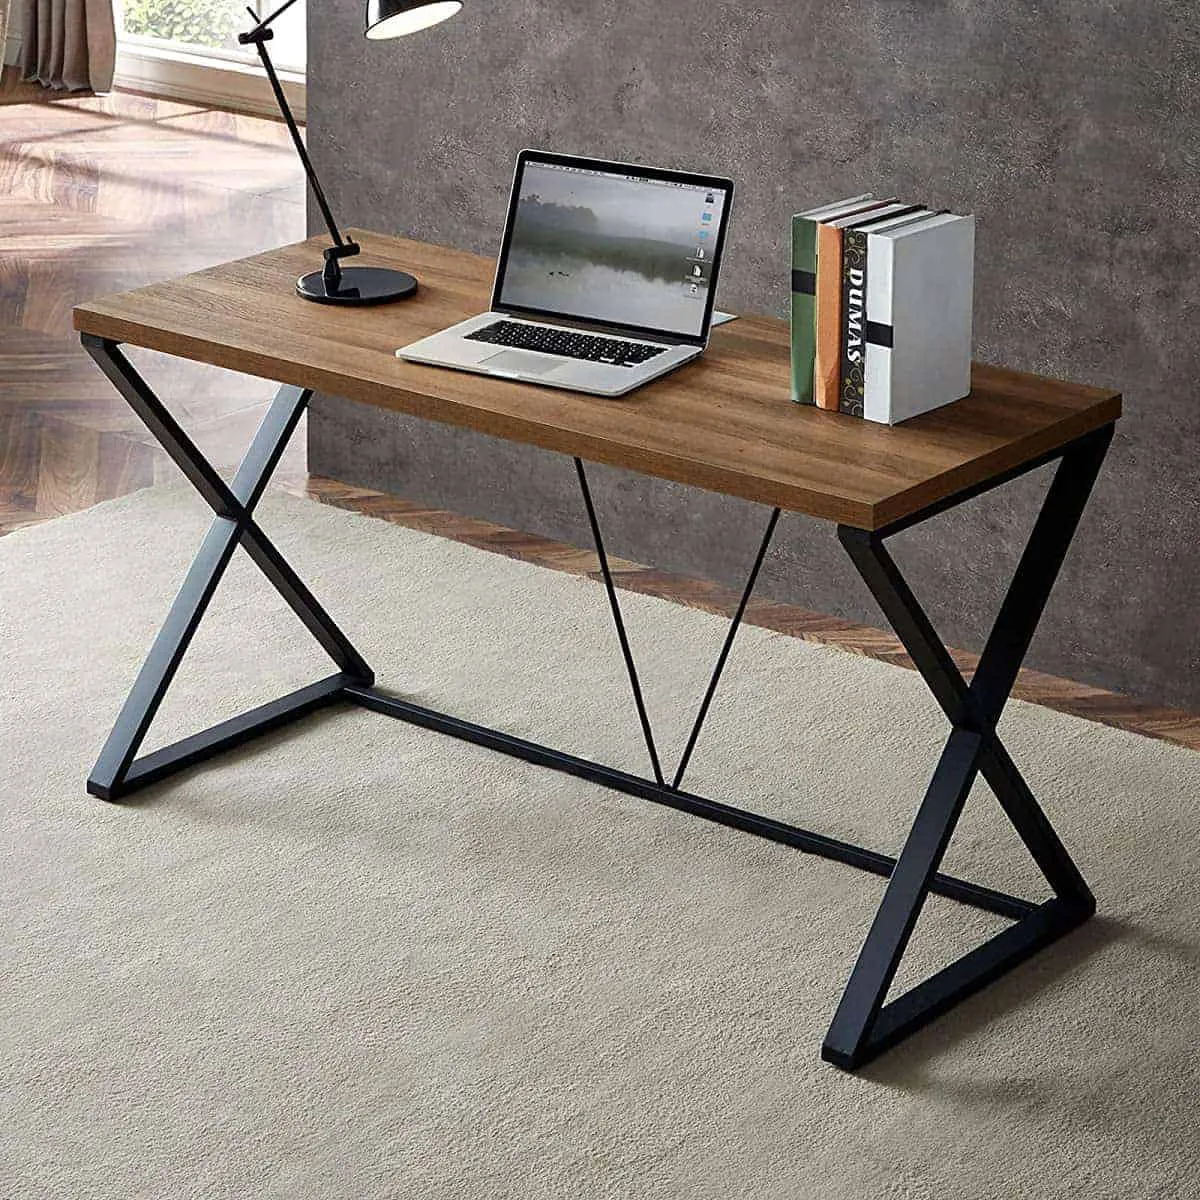 wood top and metal frame furniture, laptop